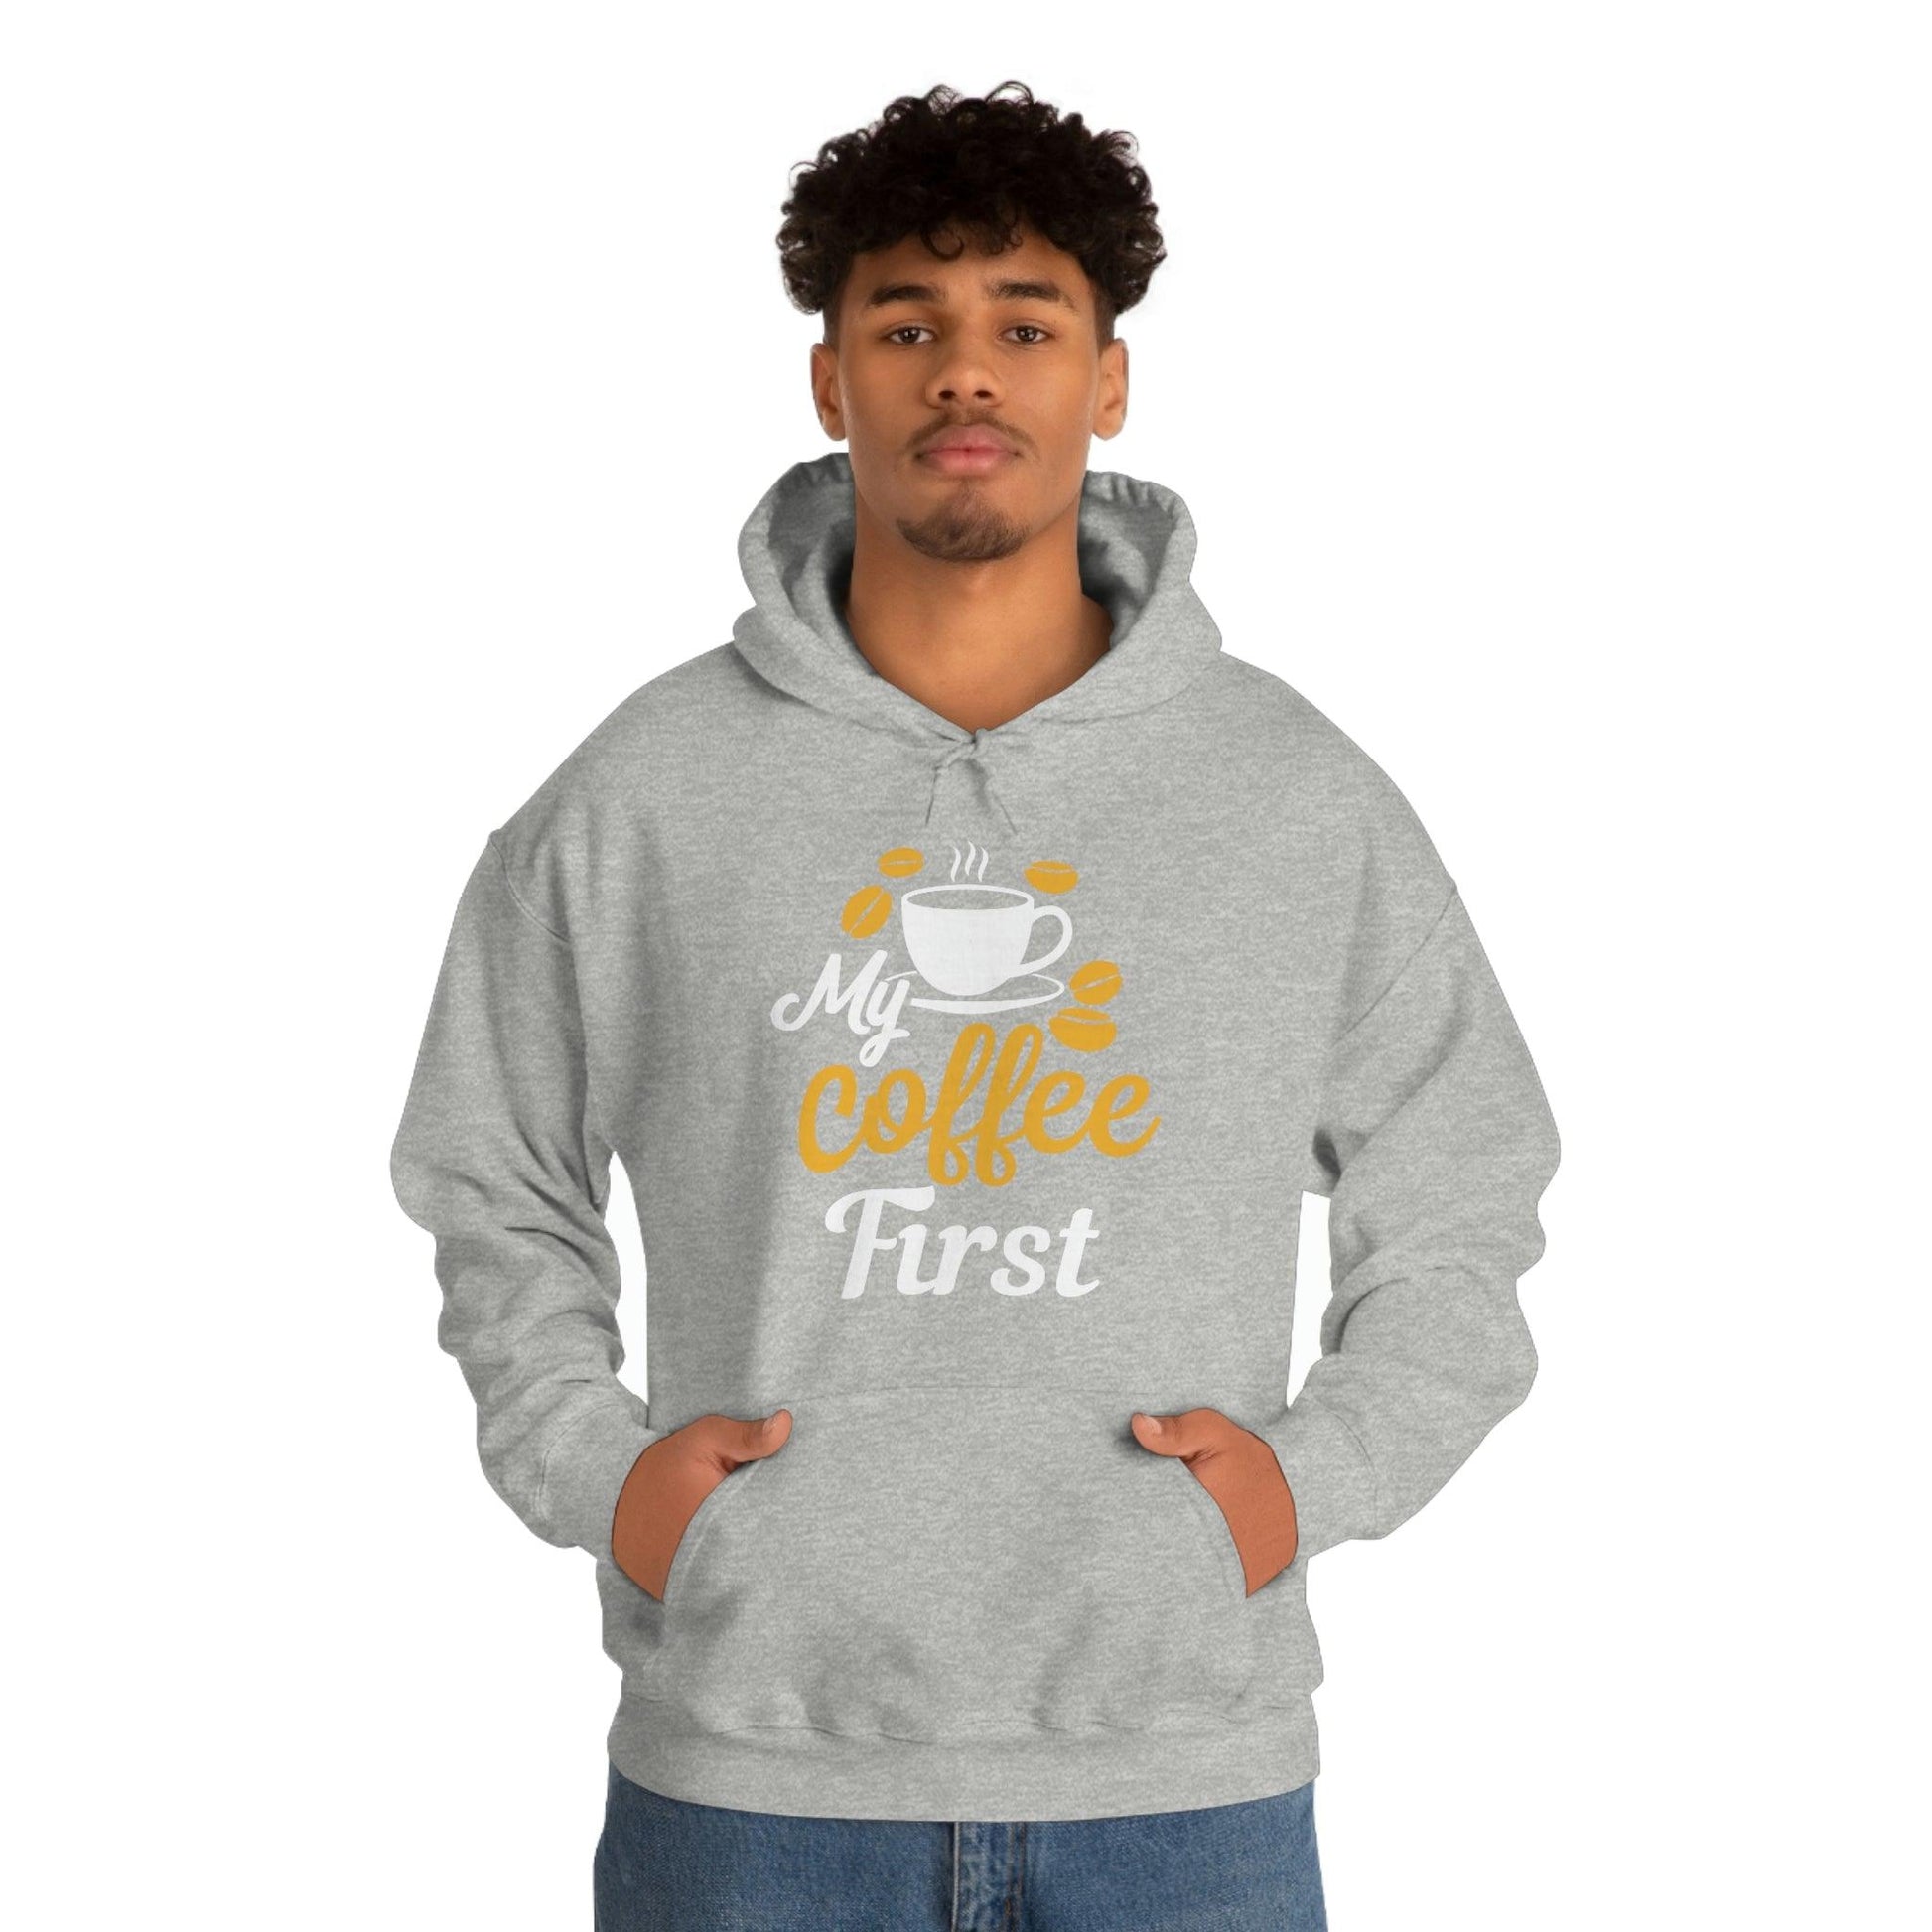 My coffee first Hooded Sweatshirt - Giftsmojo